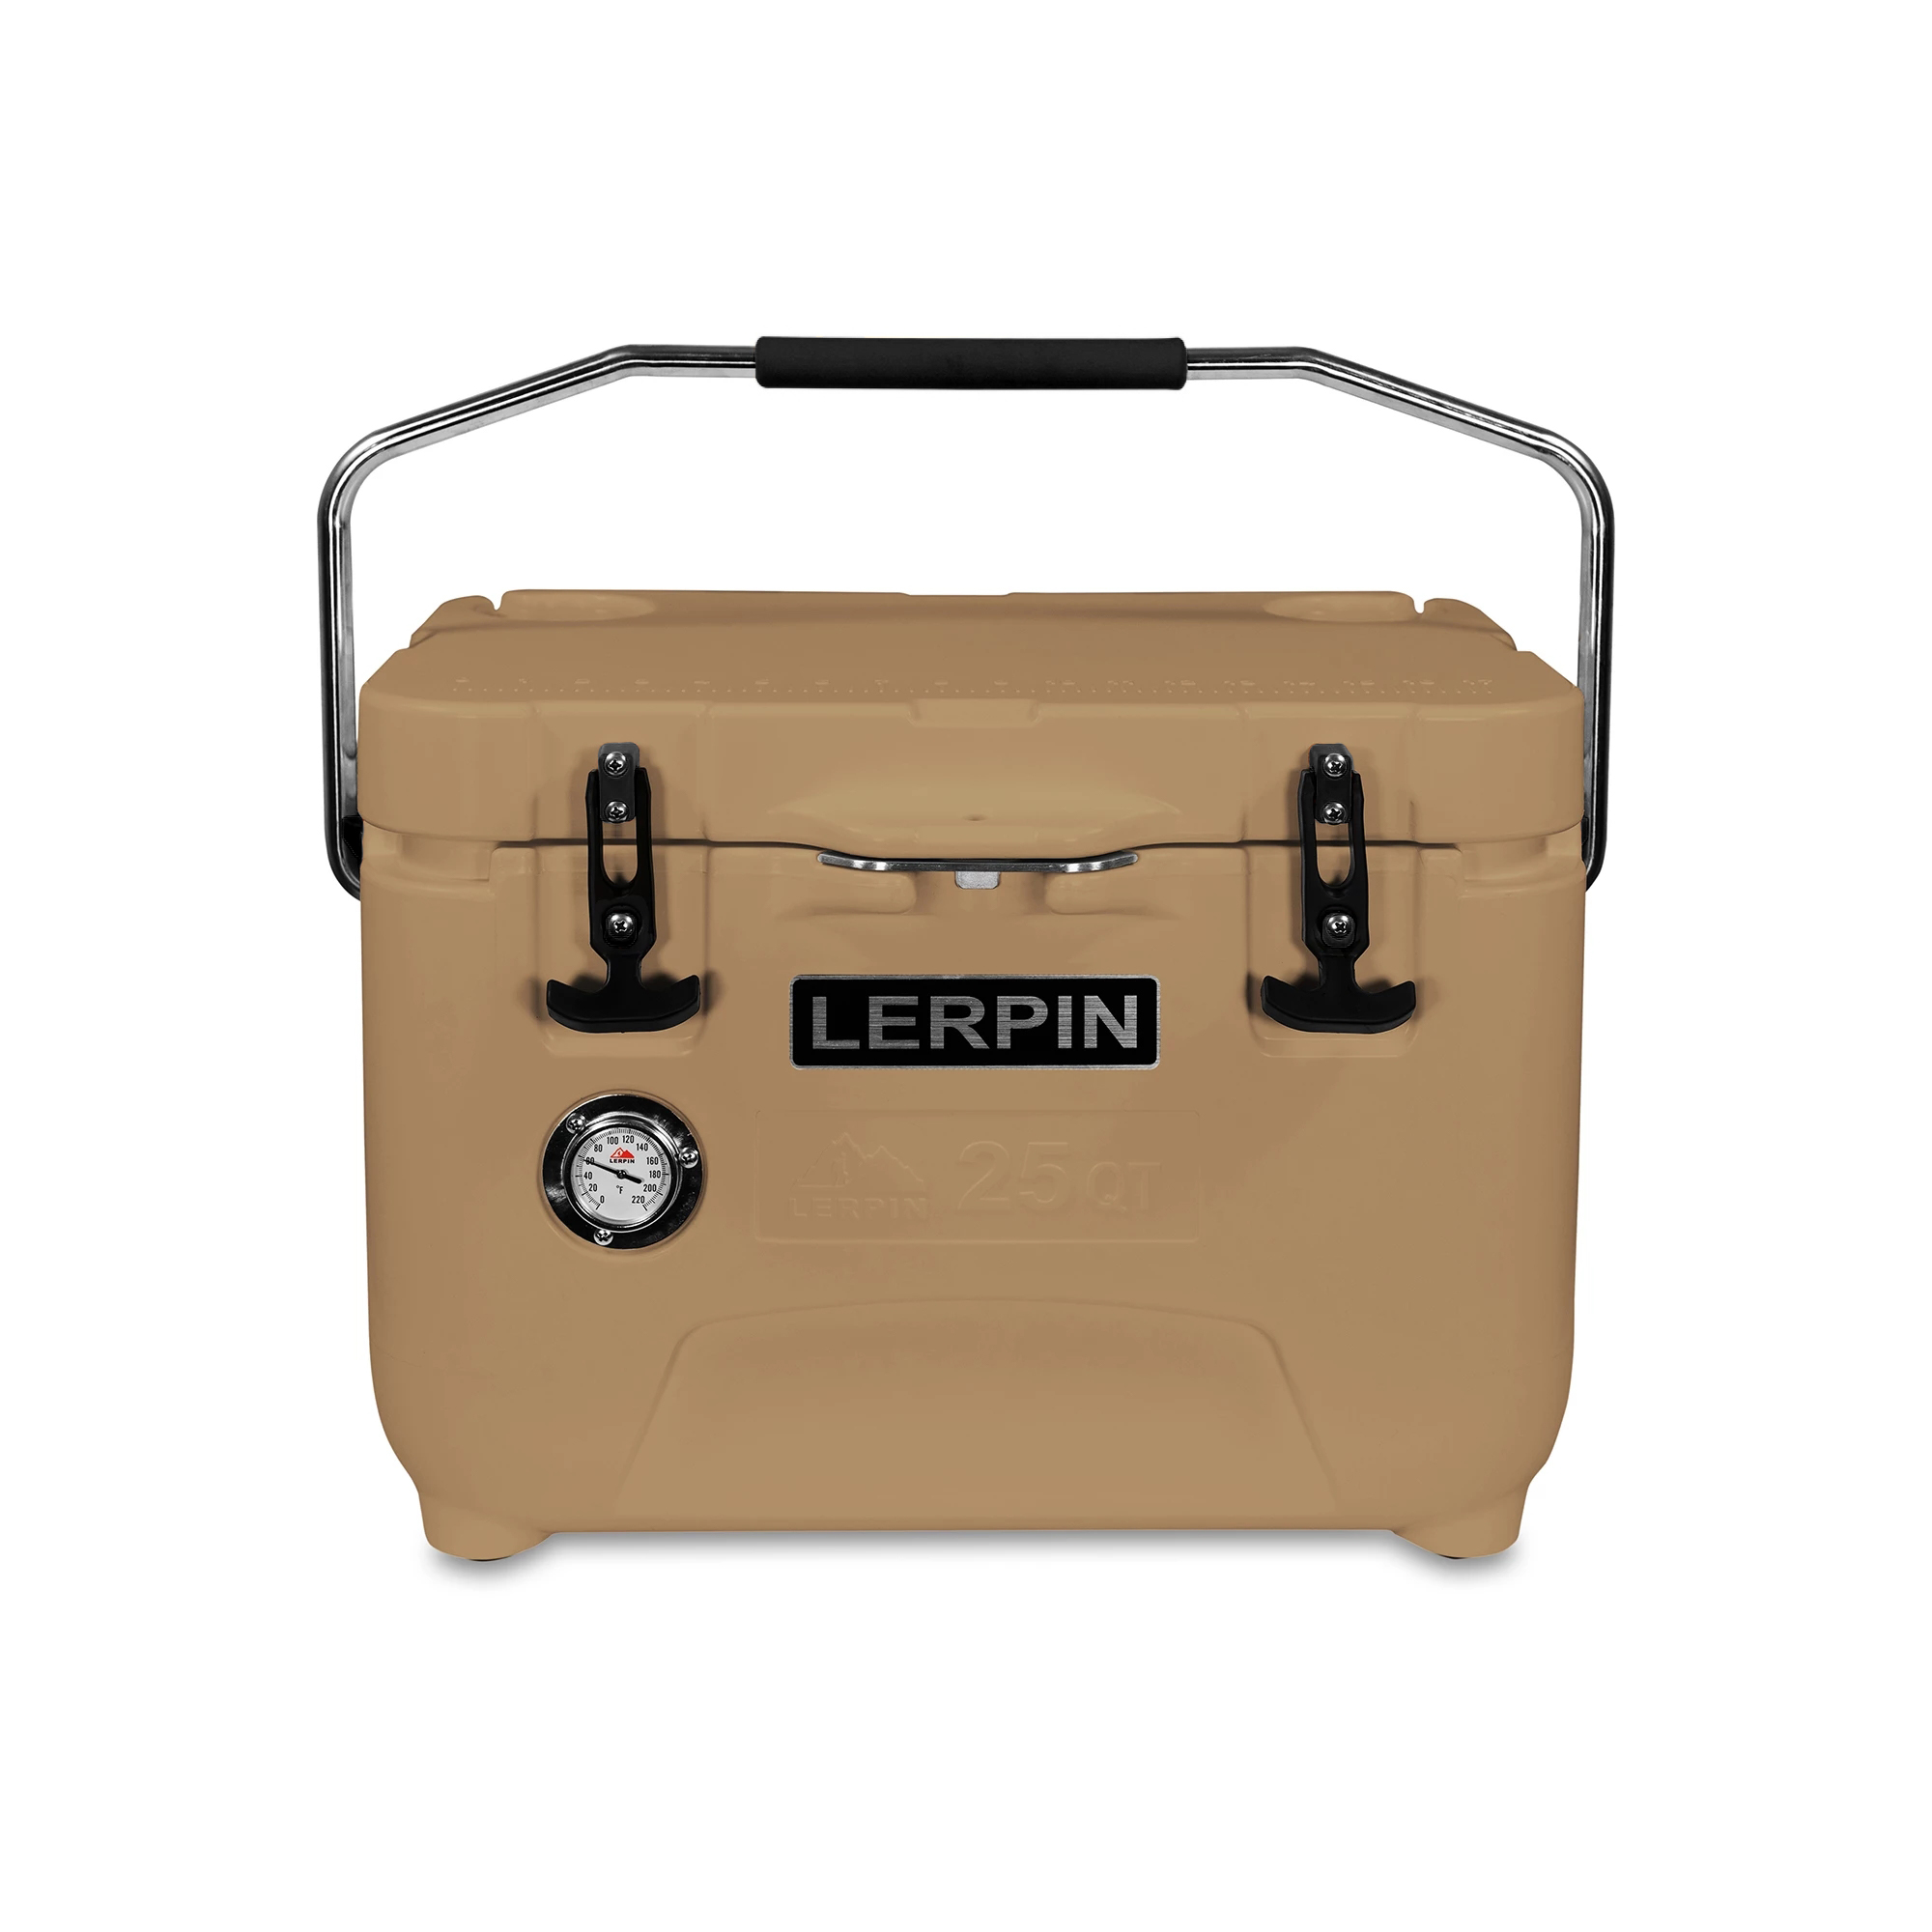 Lerpin Outdoor Rotomolded Ice Chest Cooler Box Camping Cooler Mini Fridge